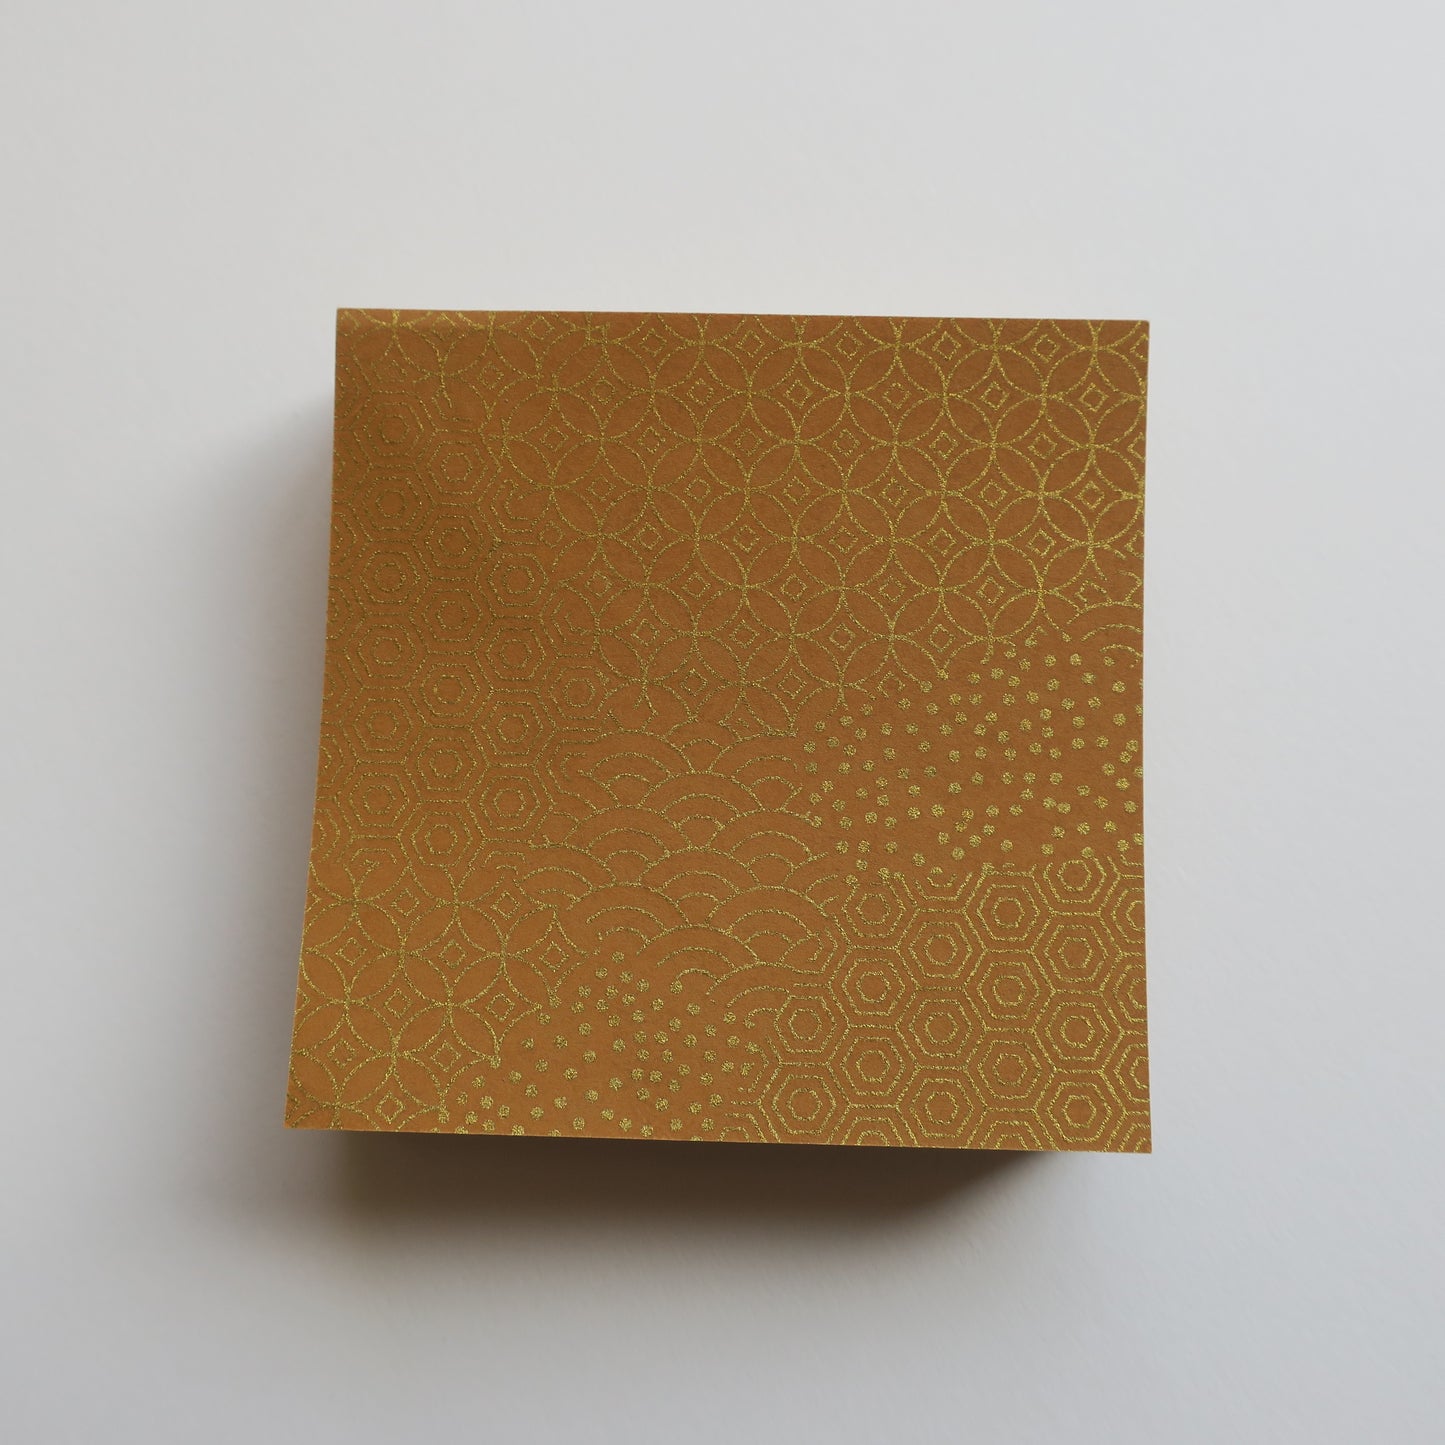 Pack of 100 Sheets 7x7cm Yuzen Washi Origami Paper HZ-494 - Blown Gold Mixed Geometric Patterns